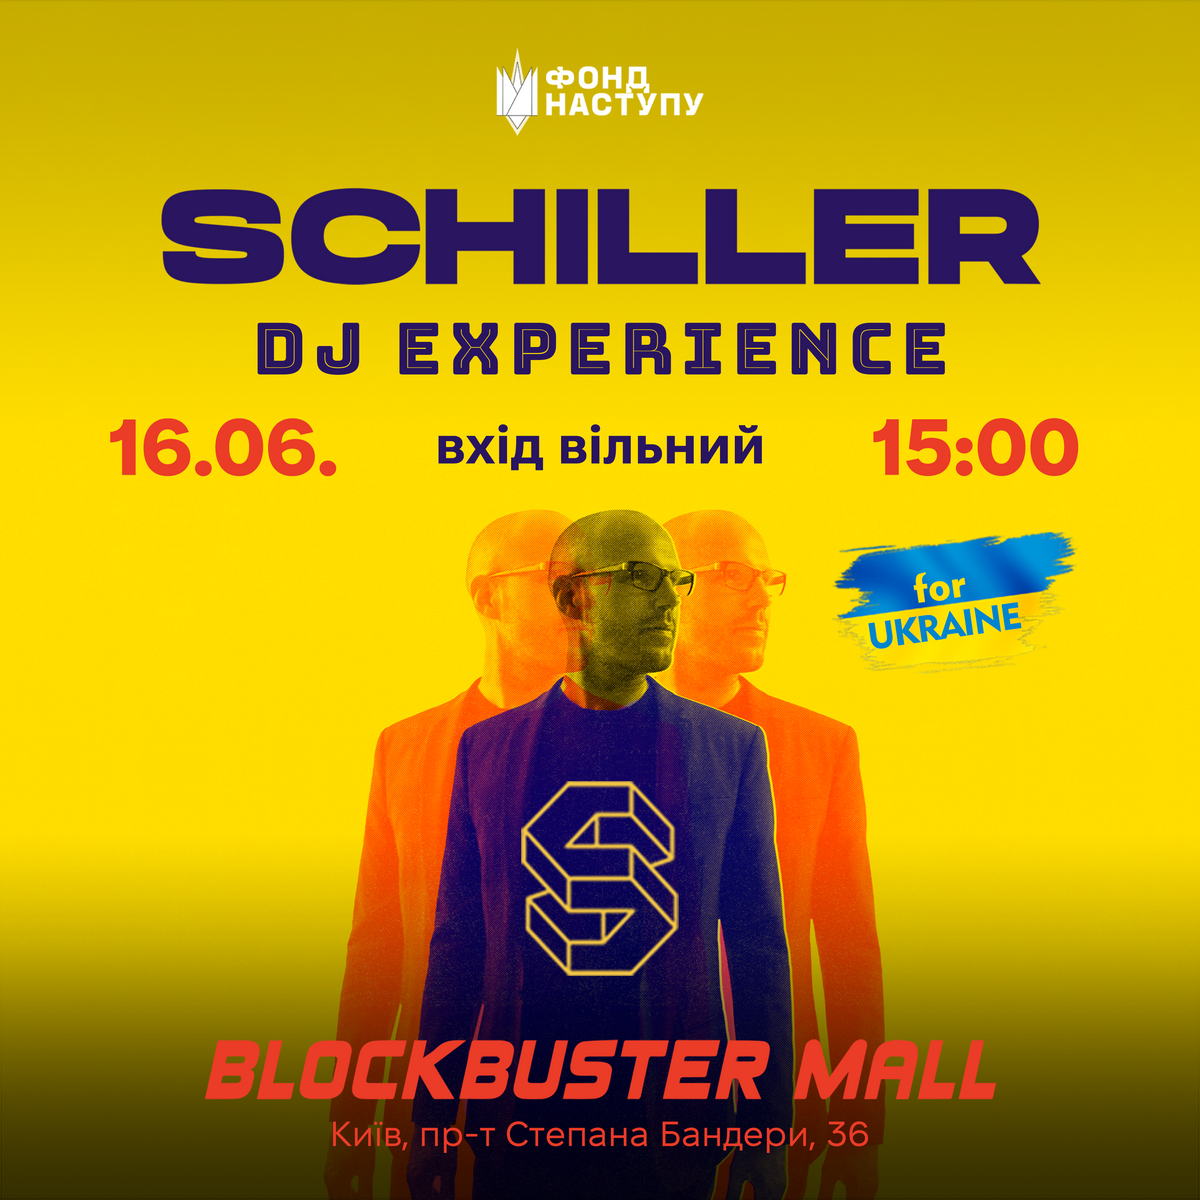 SCHILLER посетит Blockbuster Mall 16 июня!